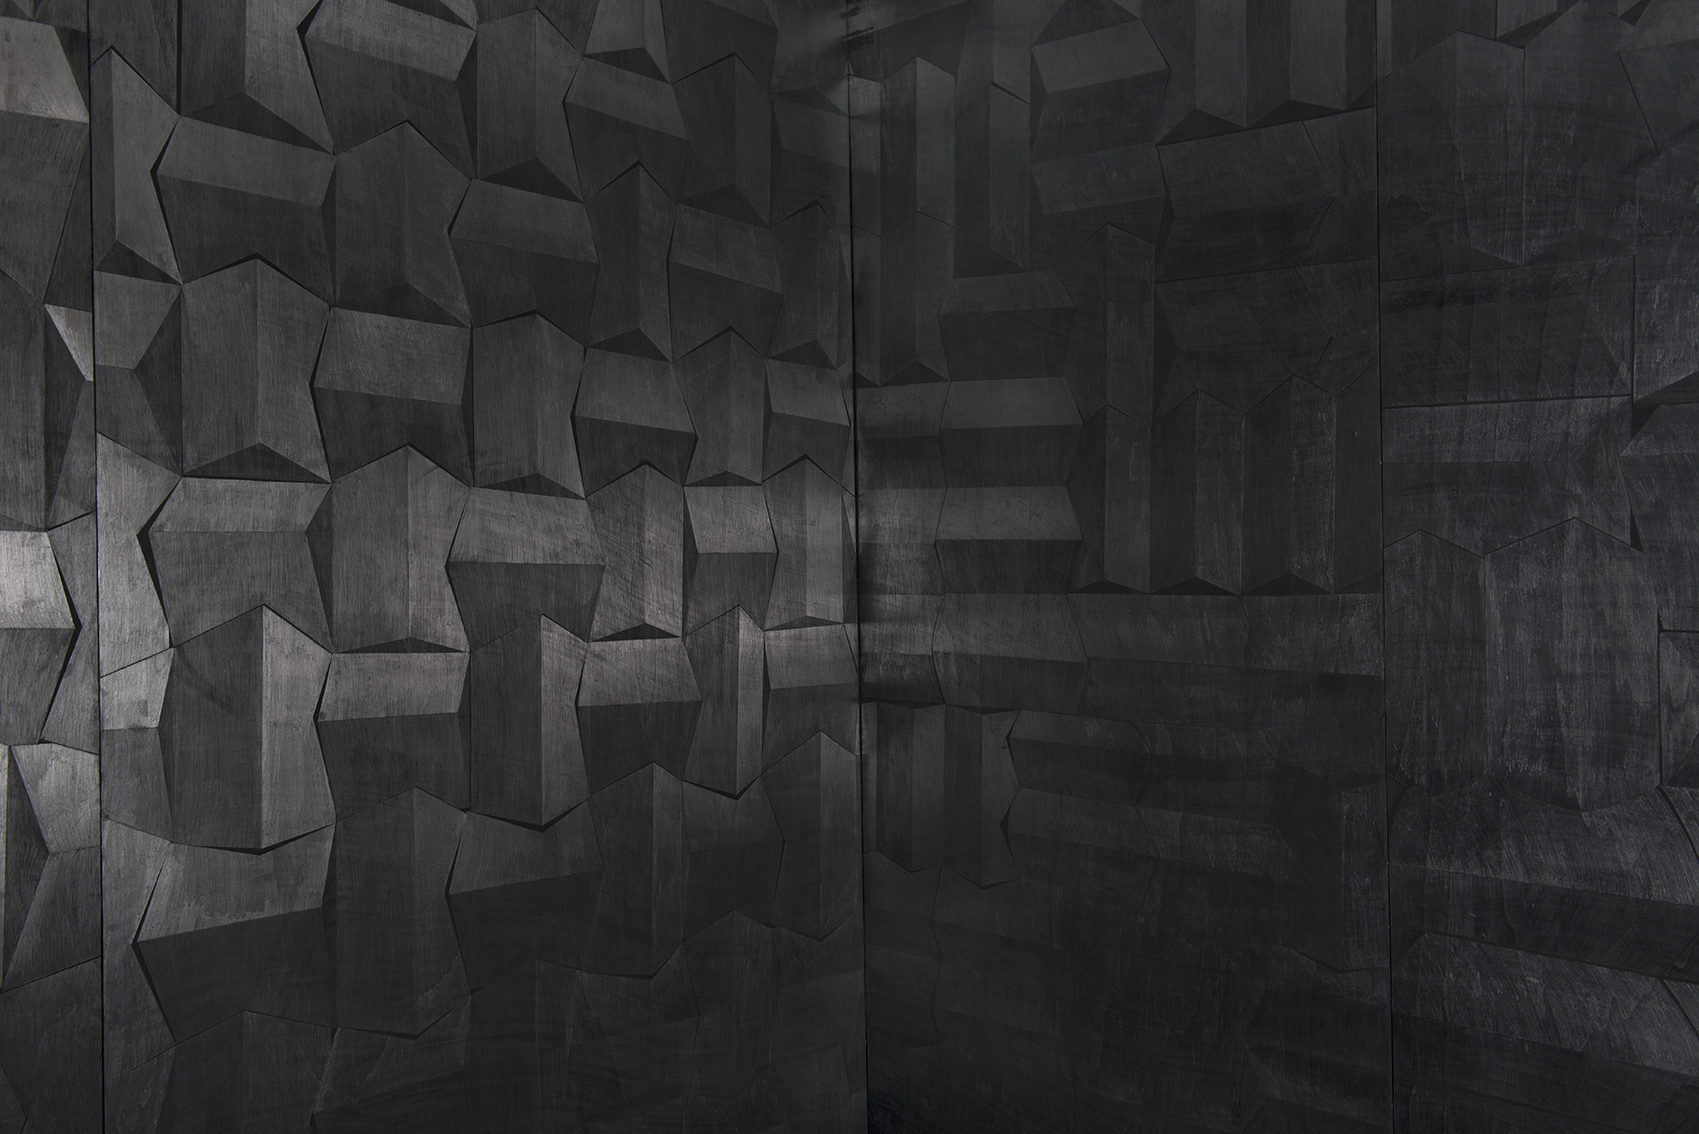 Hado, פחם וגרפיט על עץ, פרט מתוך מיצב, 2014 (5).jpg